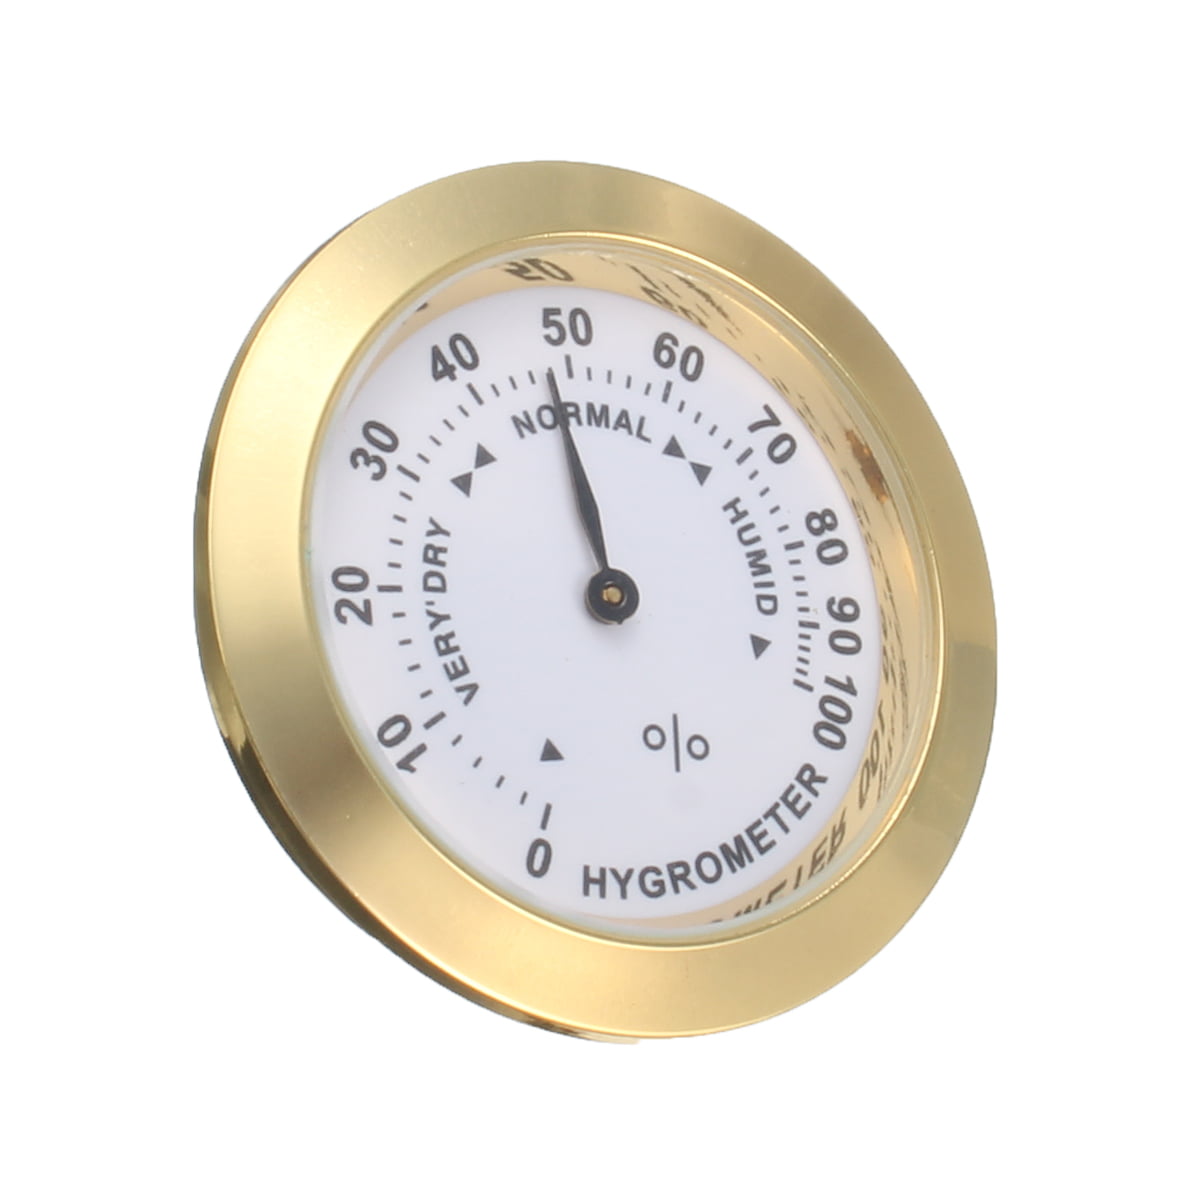 Gold Brass Analog Hygrometer Cigar Tobacco Humidity Gauge /& Glass Lens for Humidors Smoking Humidity Sensitive Gauge